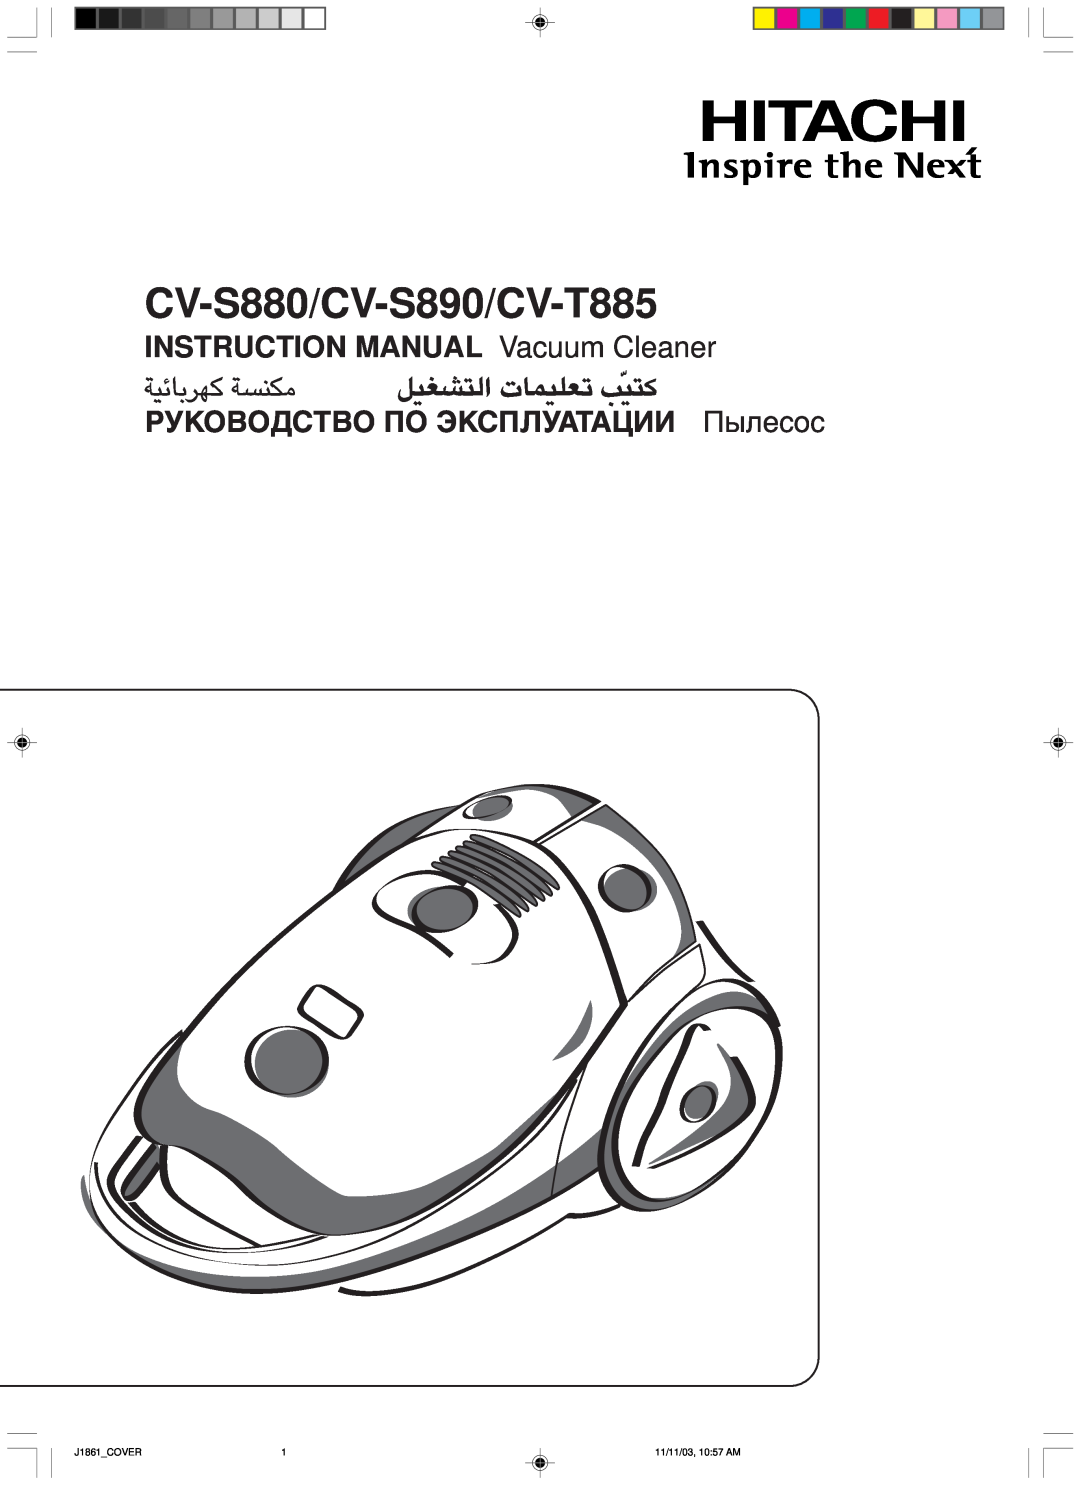 Hitachi hitachi vacuum cleaner instruction manual CV-S880/CV-S890/CV-T885, РУКОВОДСТВО ПО ЭКСПЛУАТАЦИИ Пылесос 